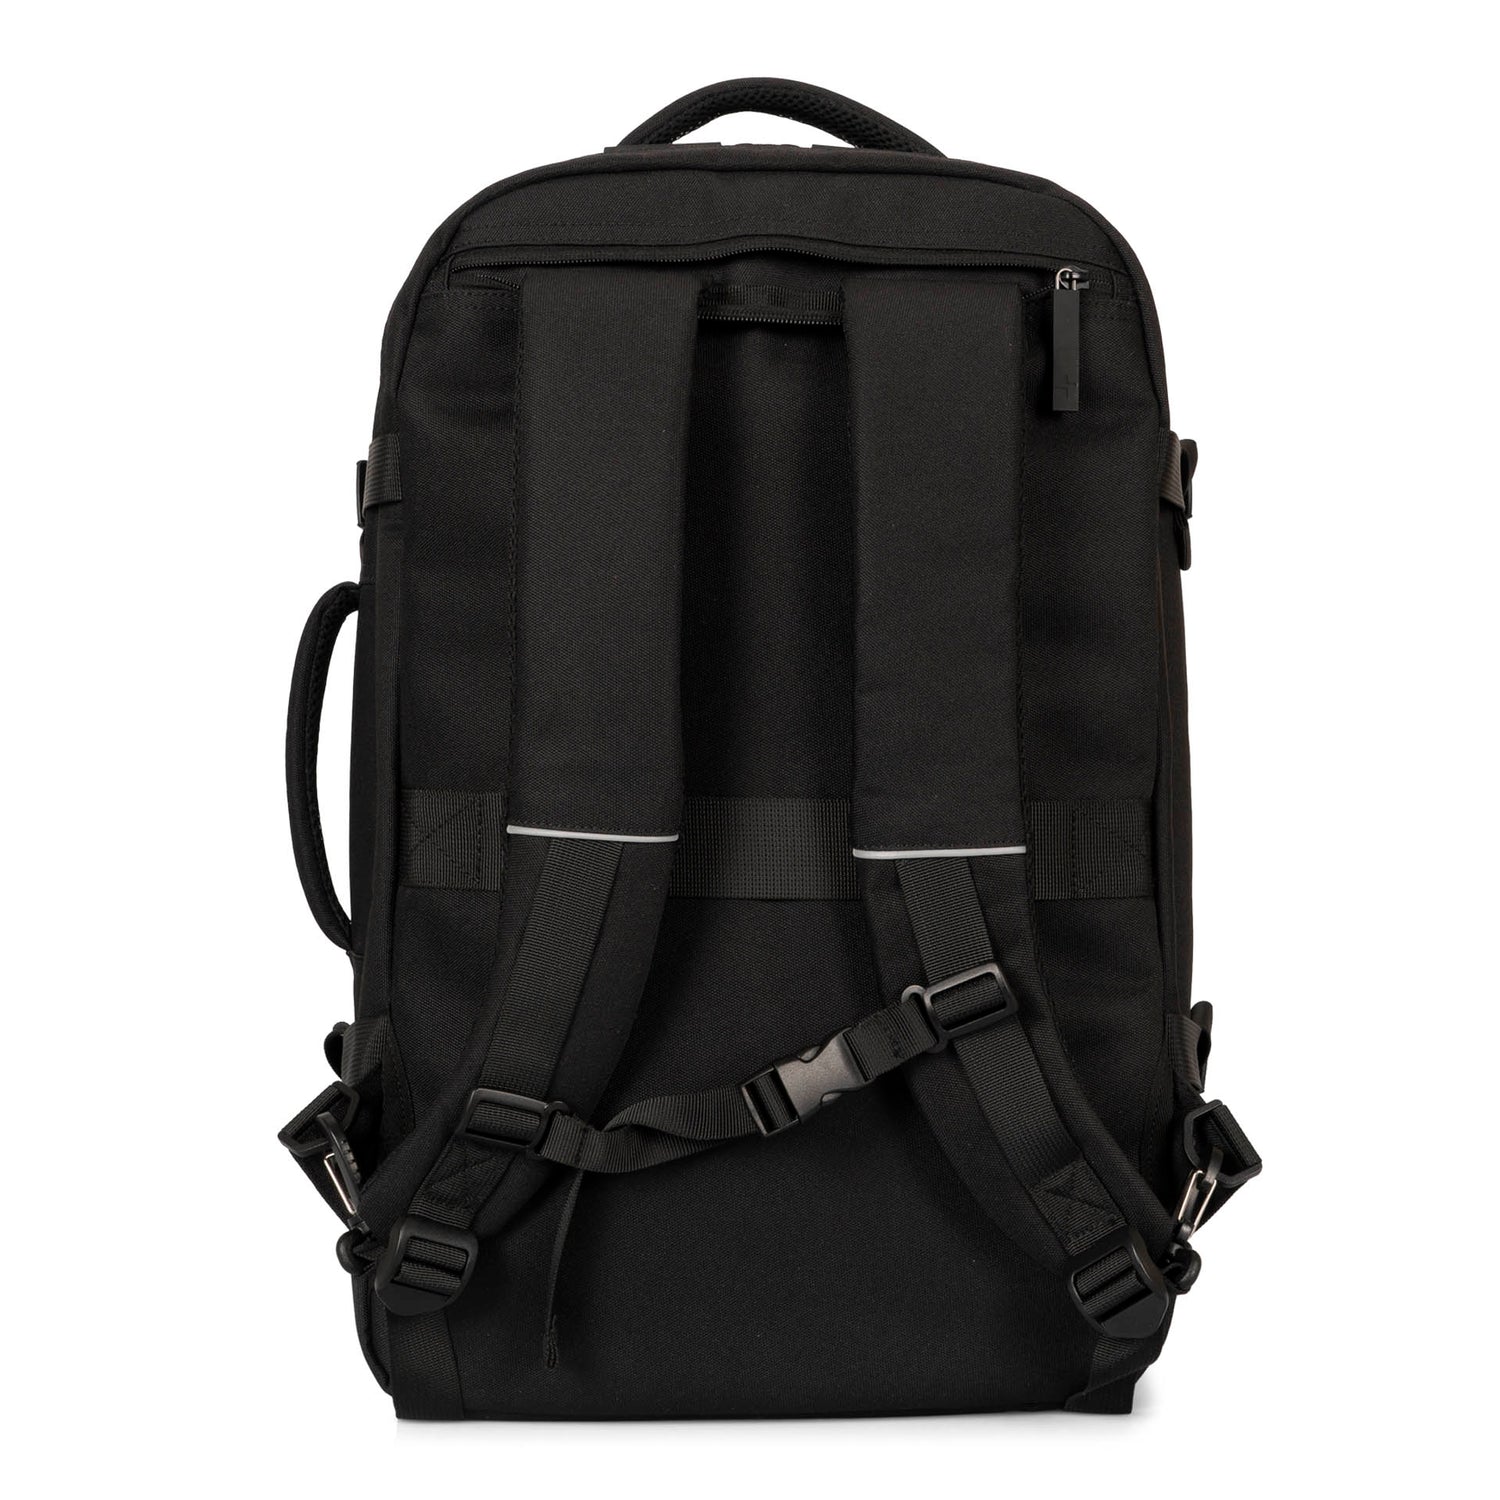 Back side of a black backpack called West Bay 3.0 Convertible designed by Tracker showing top and side handle, shoulder straps, sternum strap, back pocket, and luggage strap.